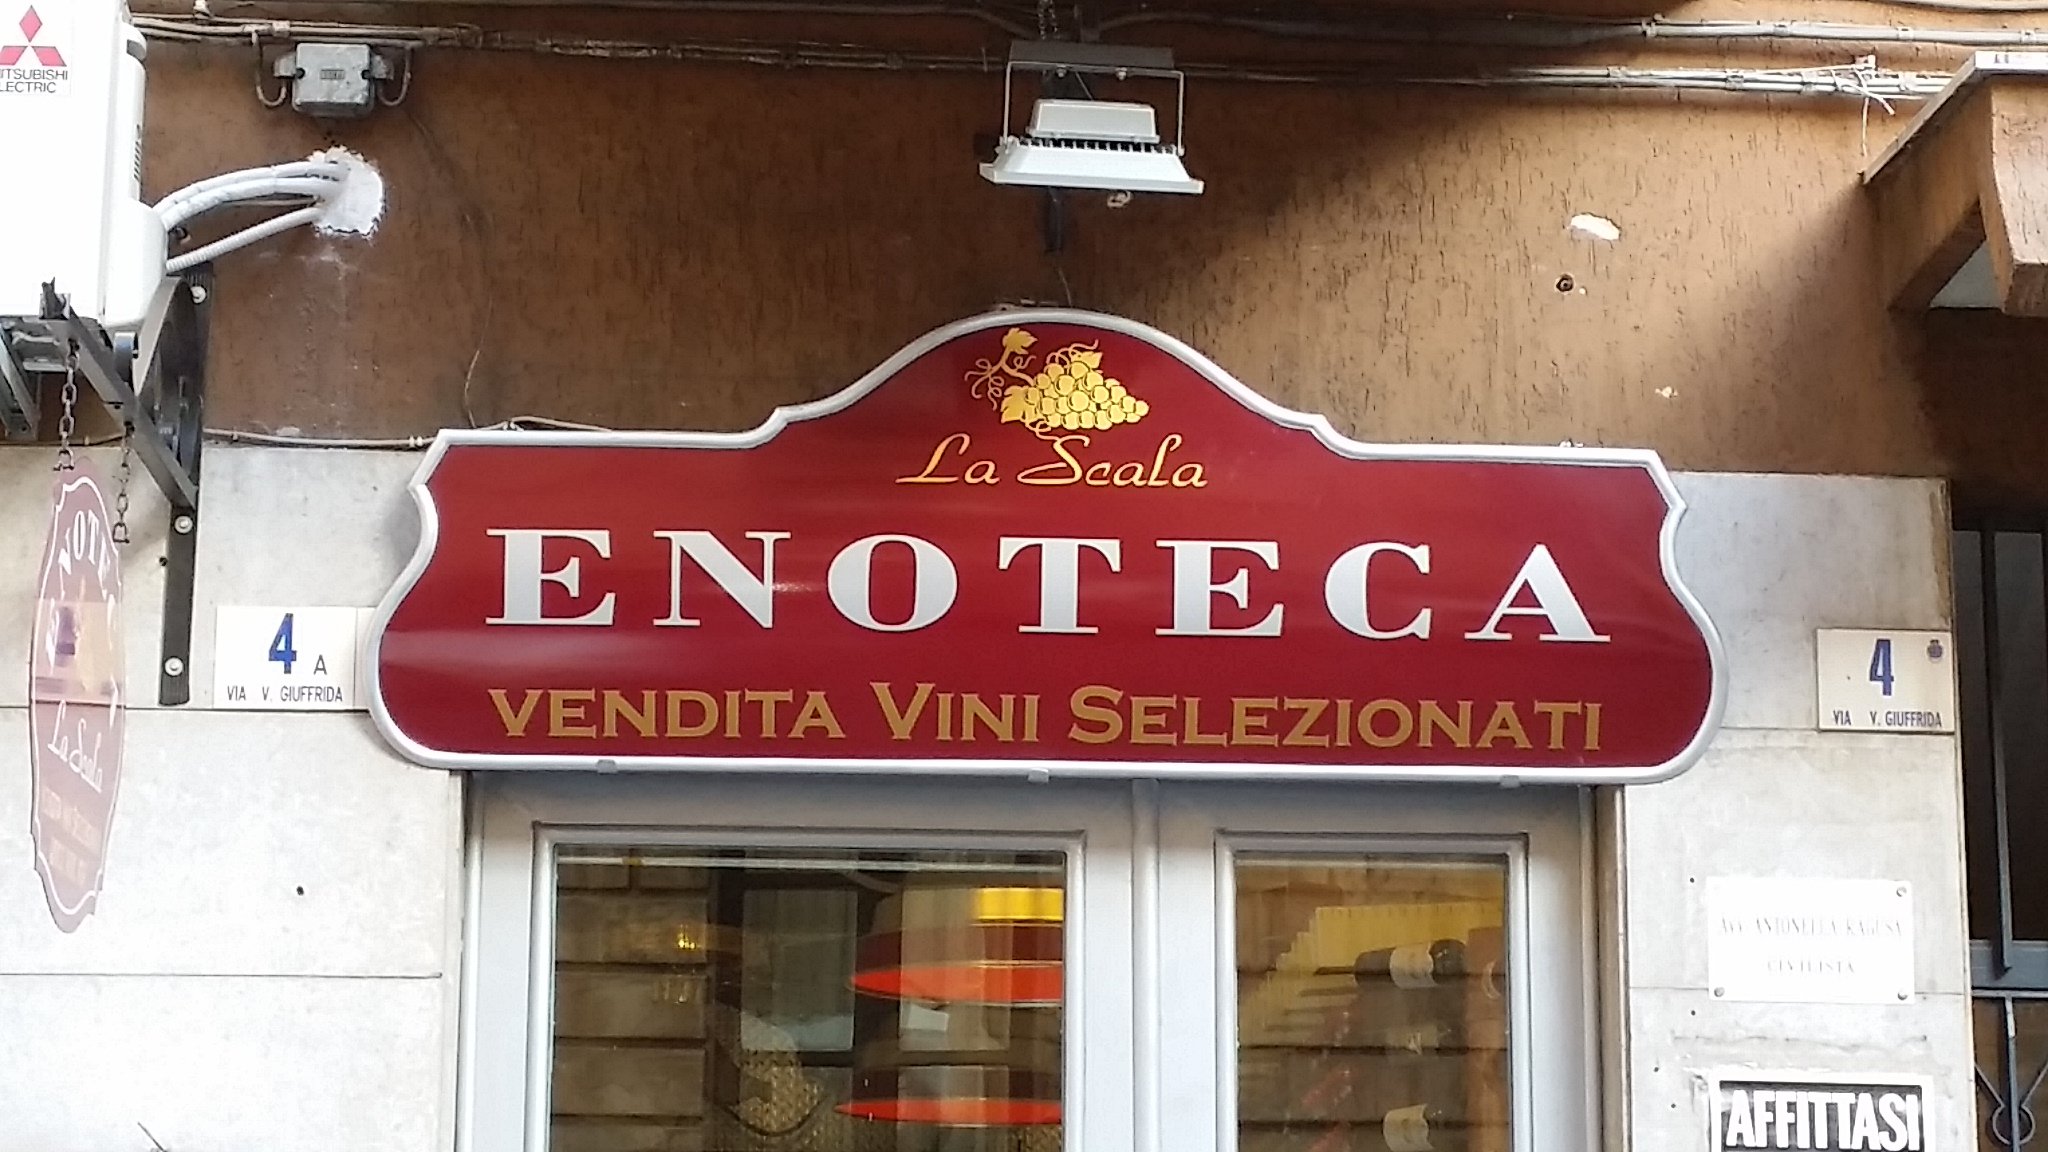 Enoteca La Scala